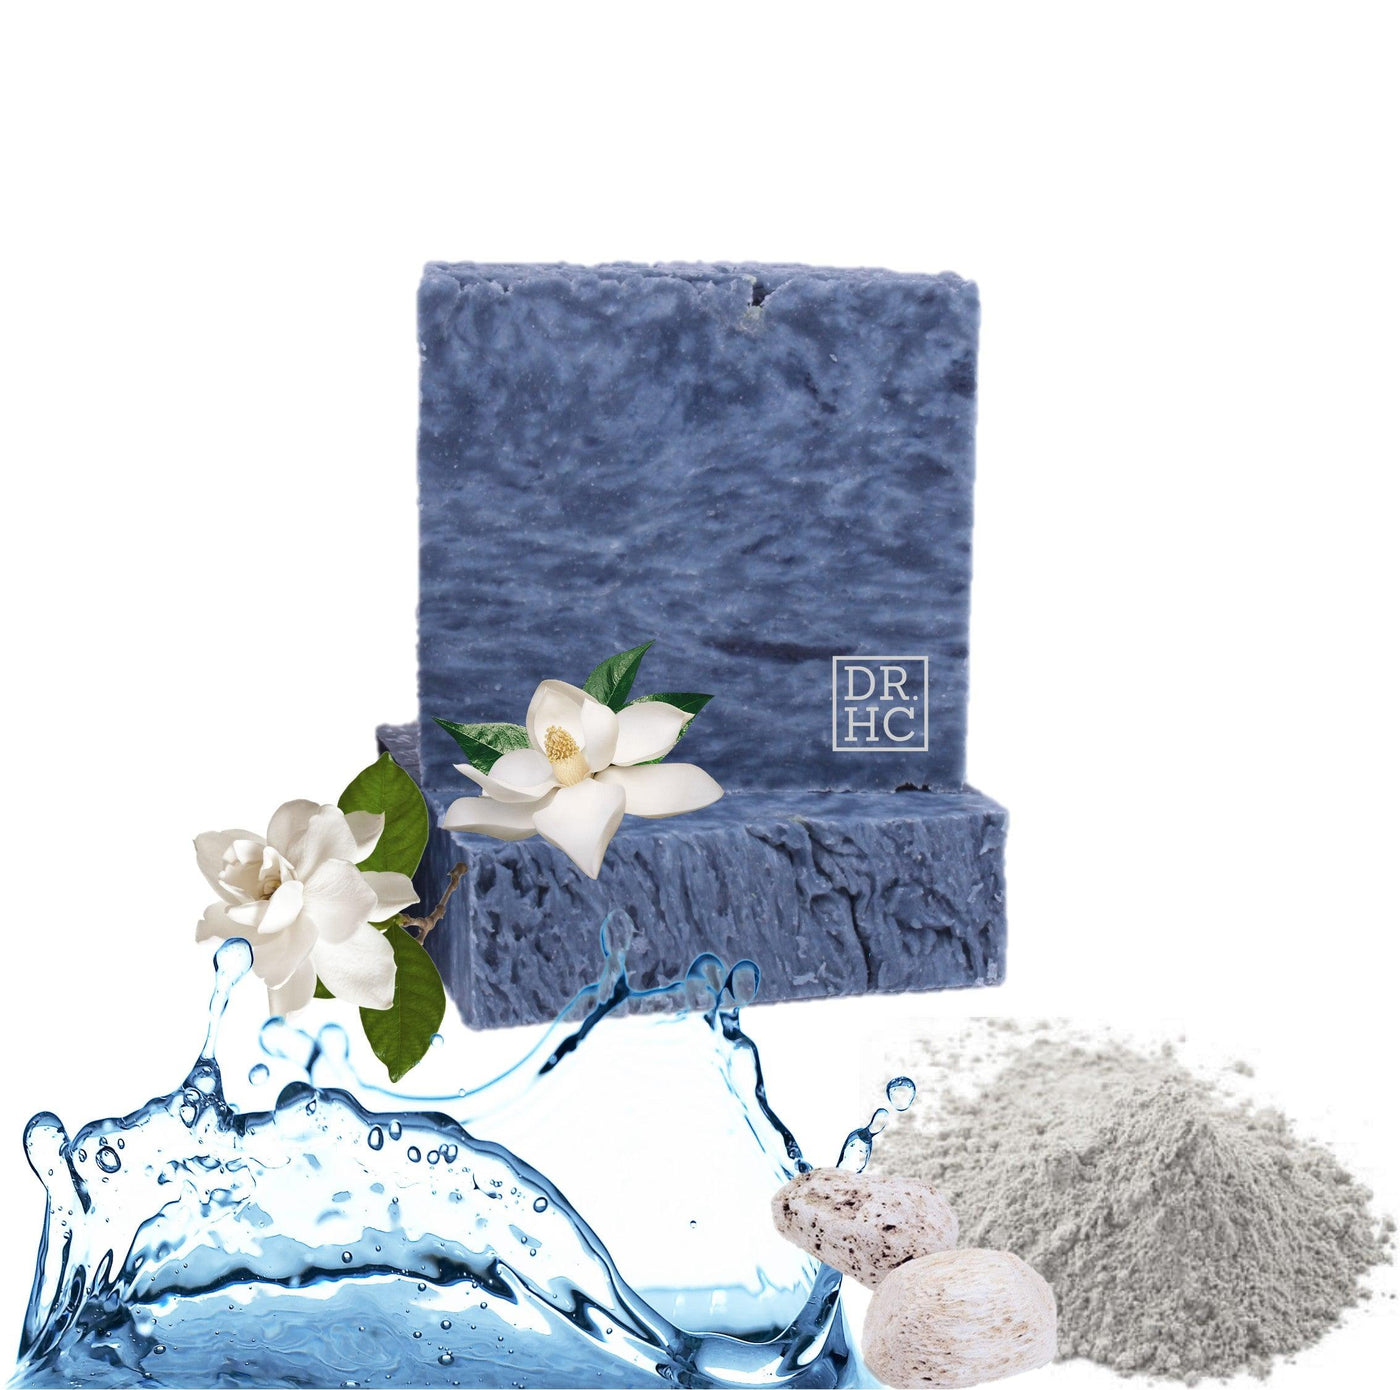 DR.HC All-Natural Skincare Scrubbing Soap - Ocean Breath (110g, 3.8oz.) (Exfoliating, Detoxifying, Anti-aging, Toning...)-2